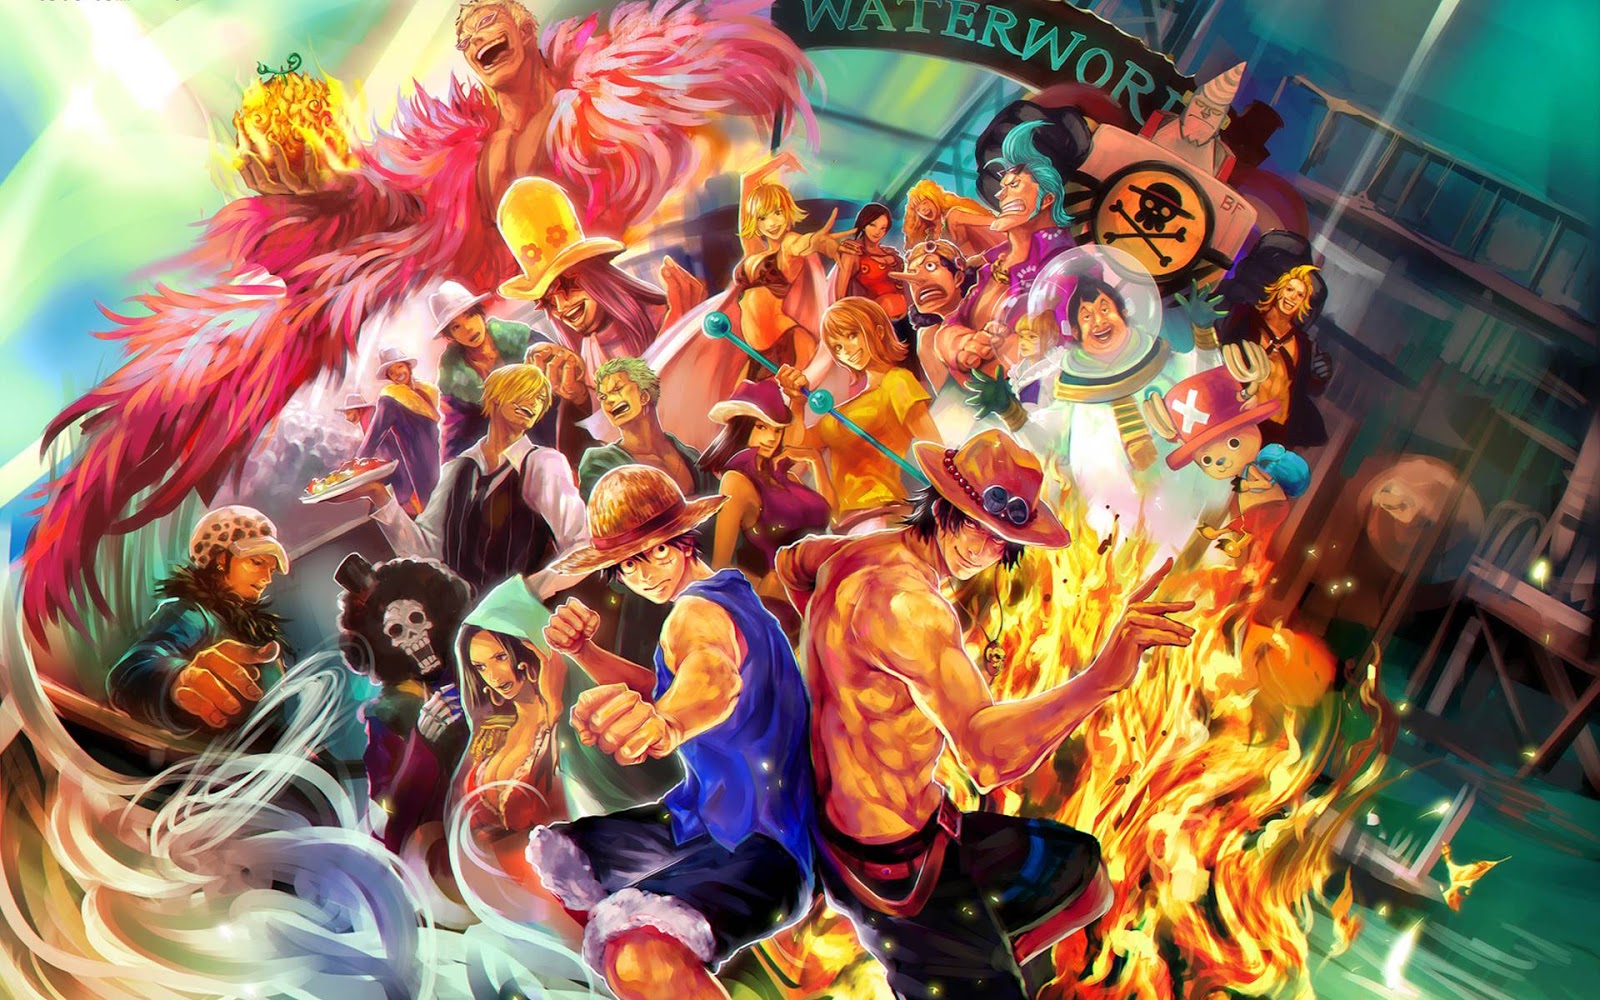  Gambar  Wallpaper One  Piece  HD Terbaru  2019 Blogyoiko com